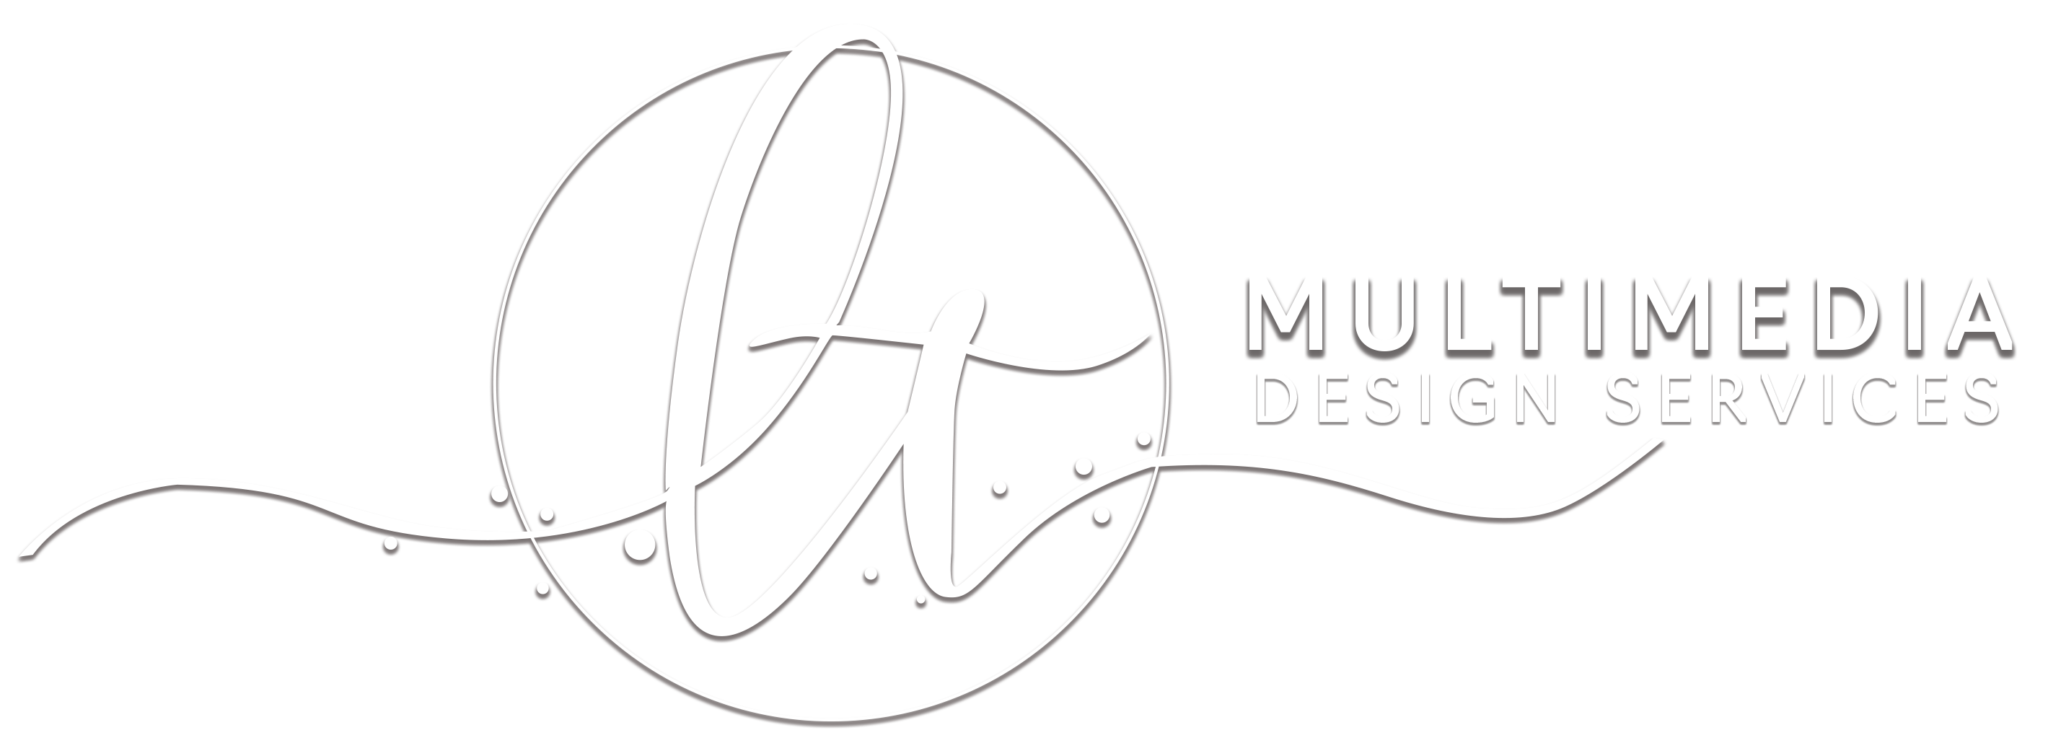 LT Multimedia Design Services